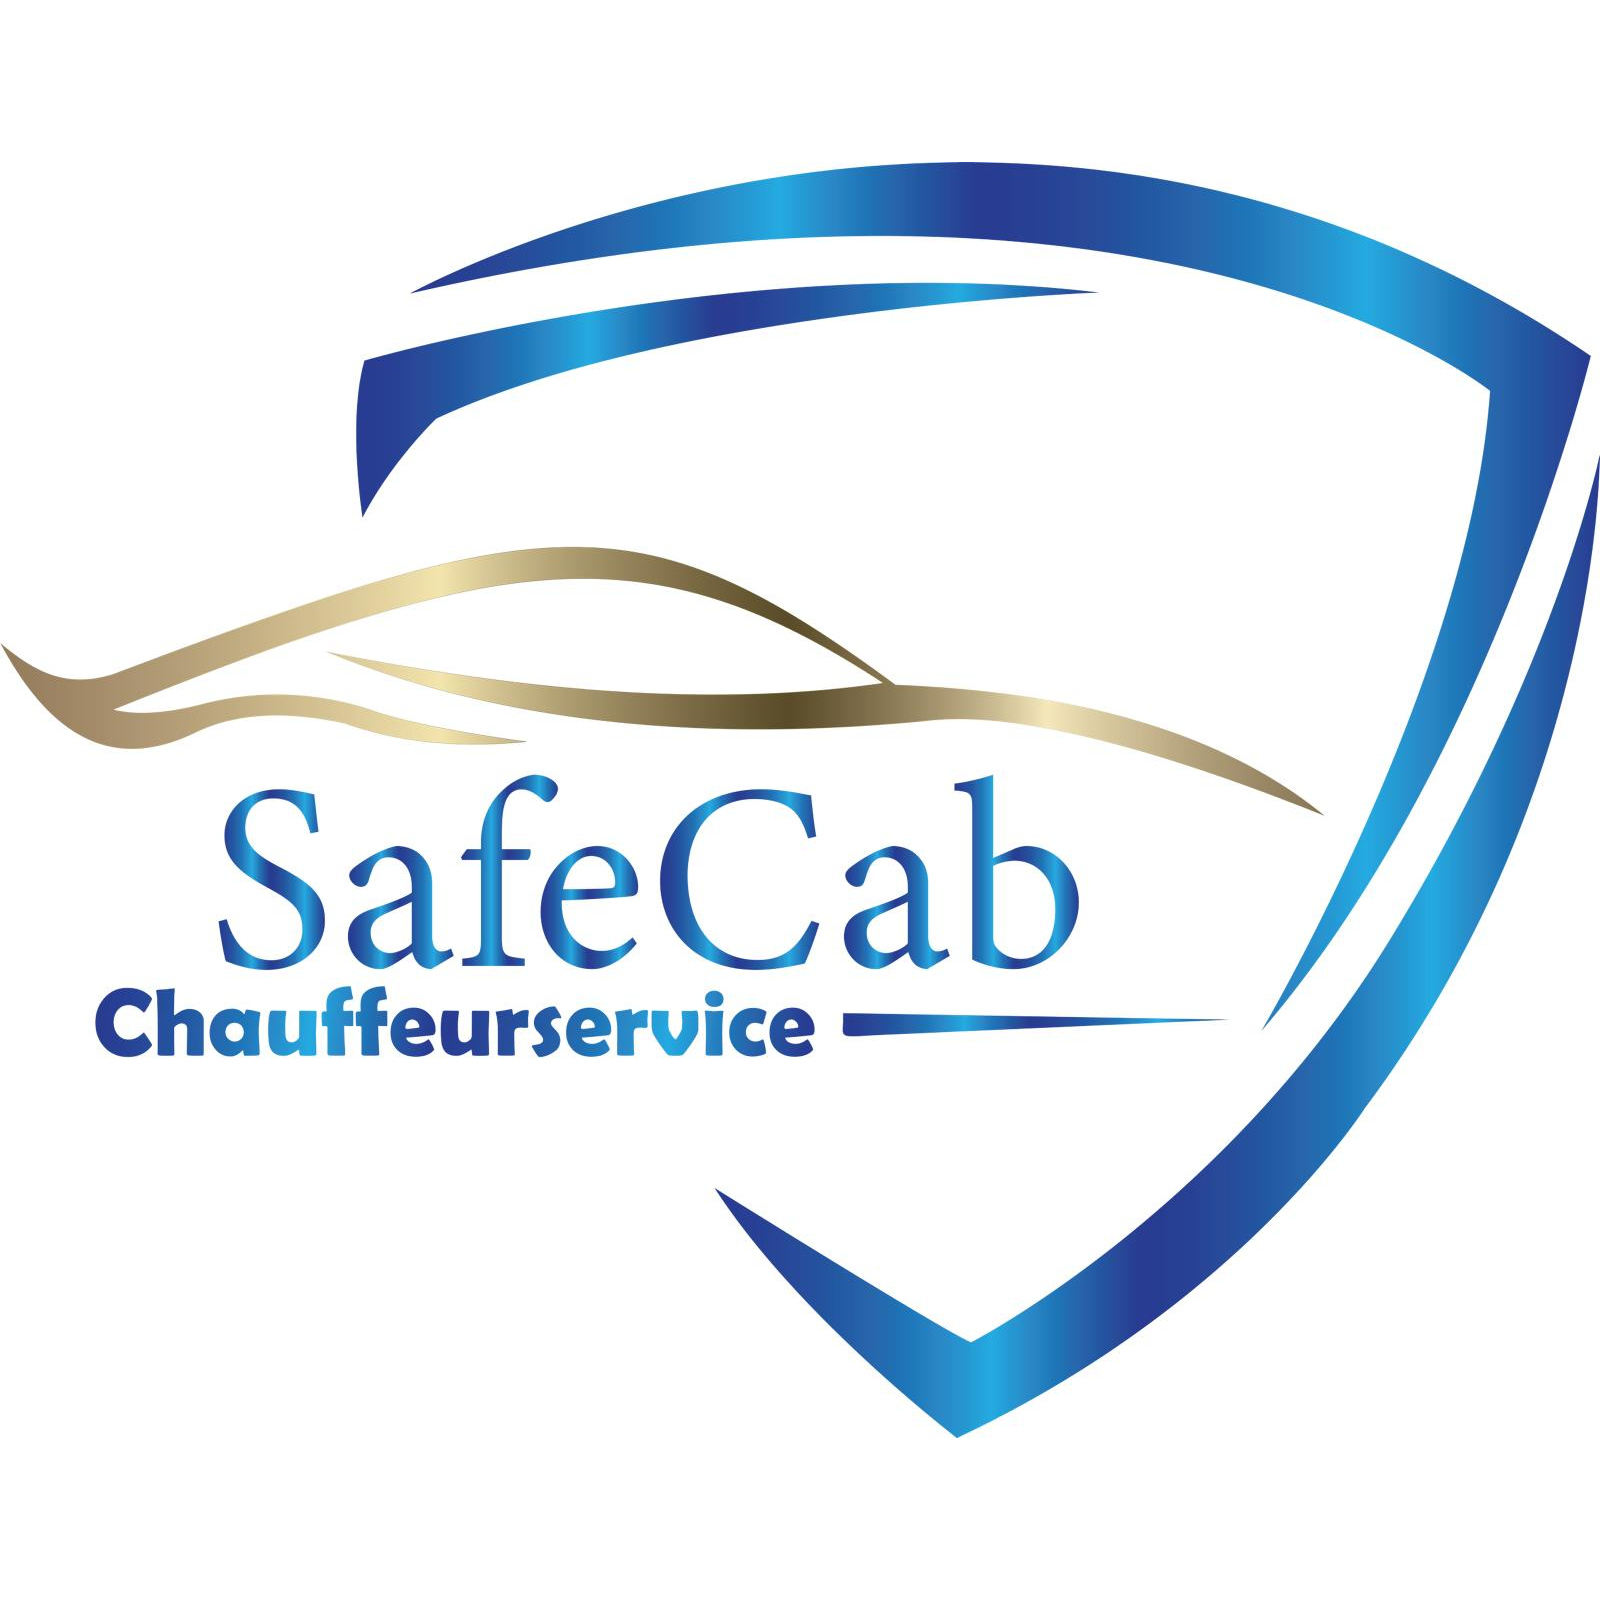 SafeCab Chauffeurservice  